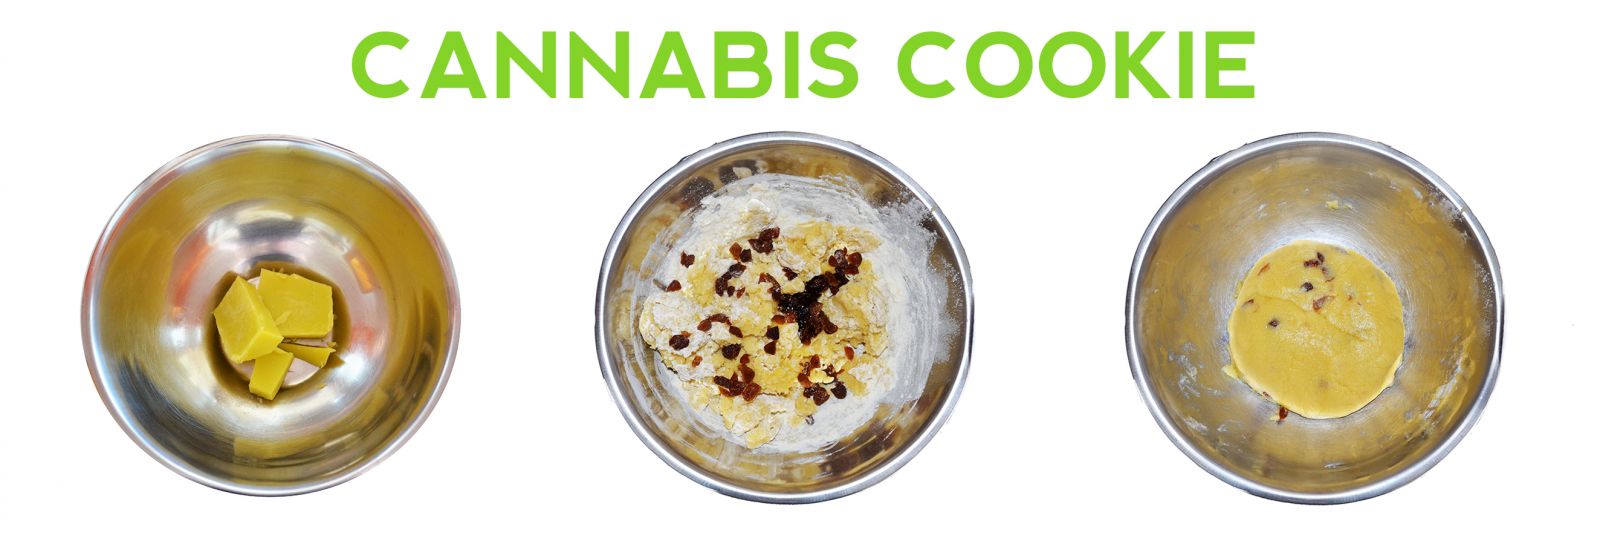 Cannabis cookie -ciasteczka z thc